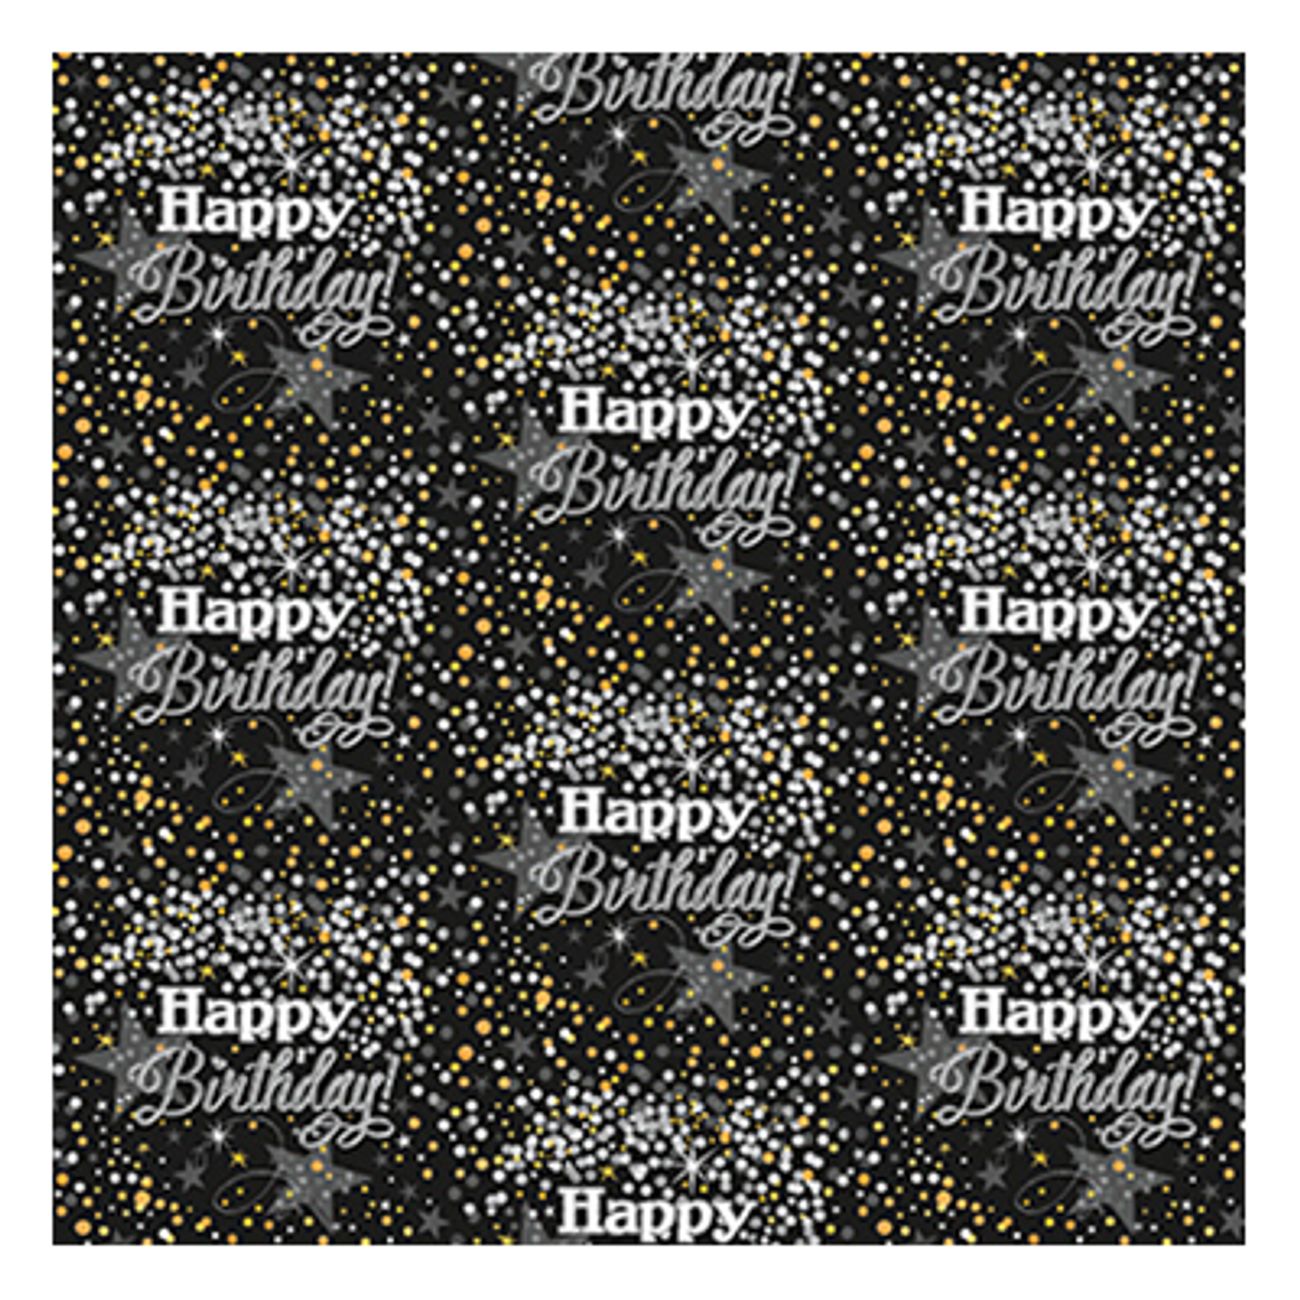 presentpapper-glitter-happy-birthday-1